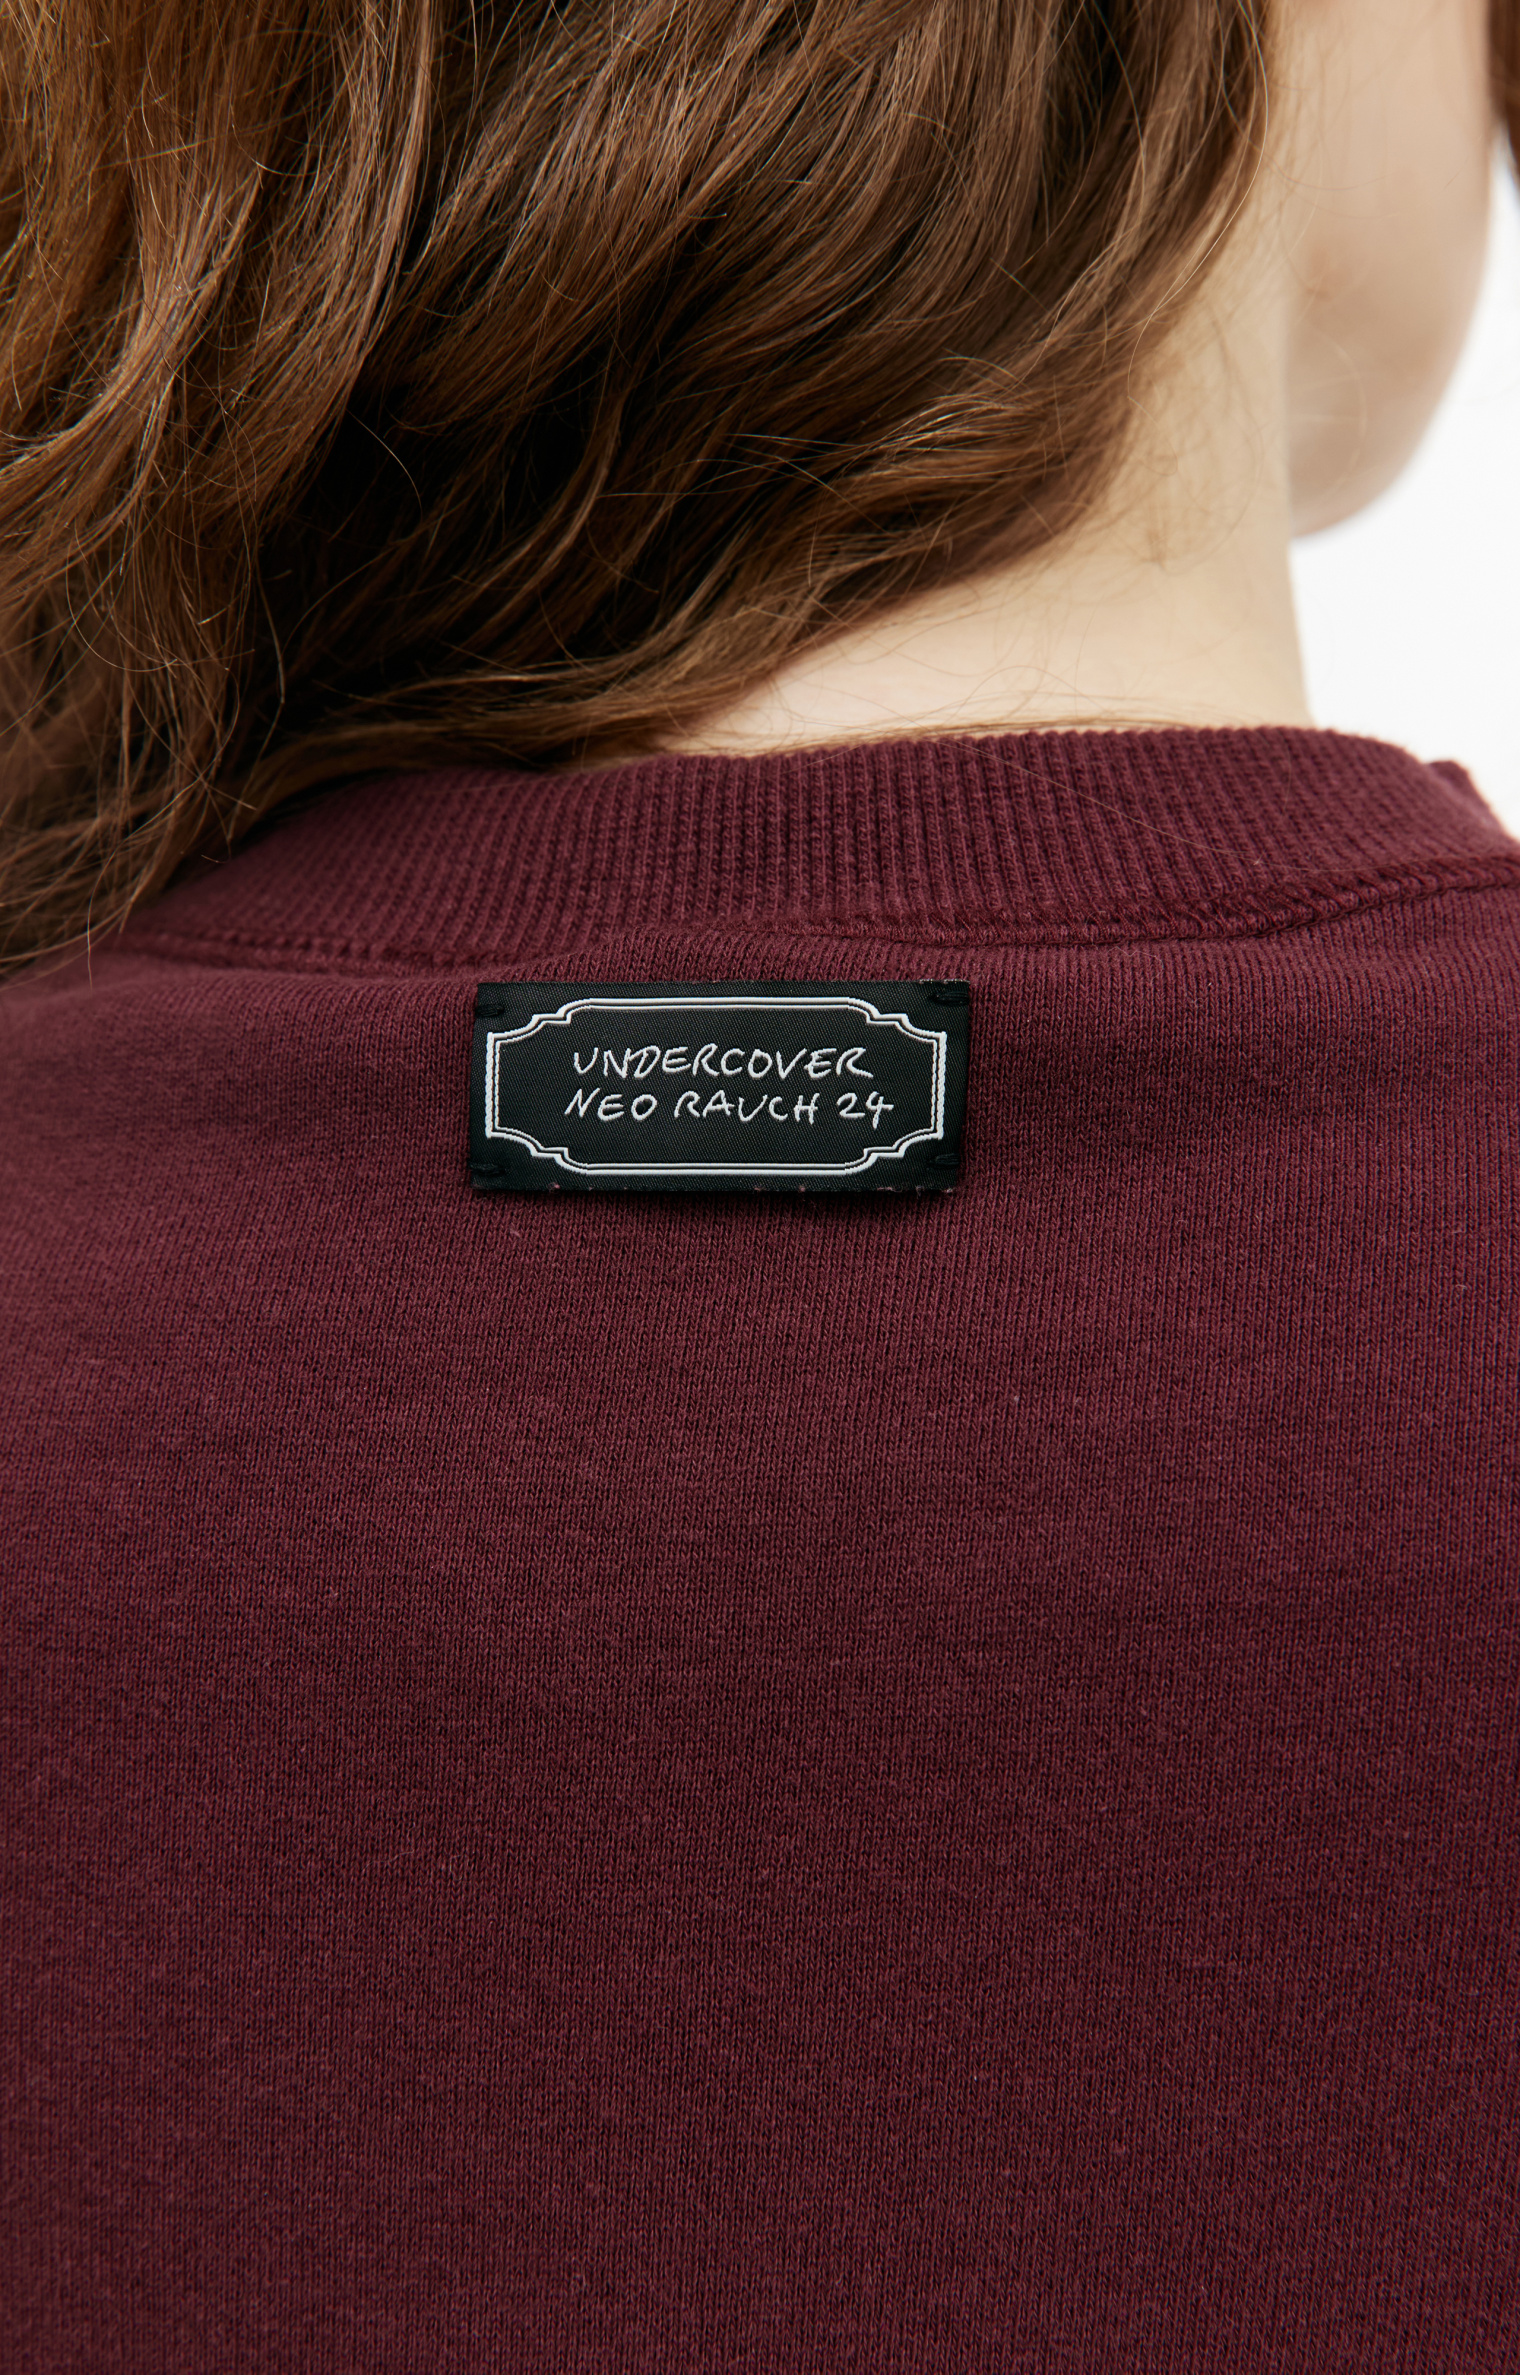 Undercover Asymmetrical printed sweatshirt